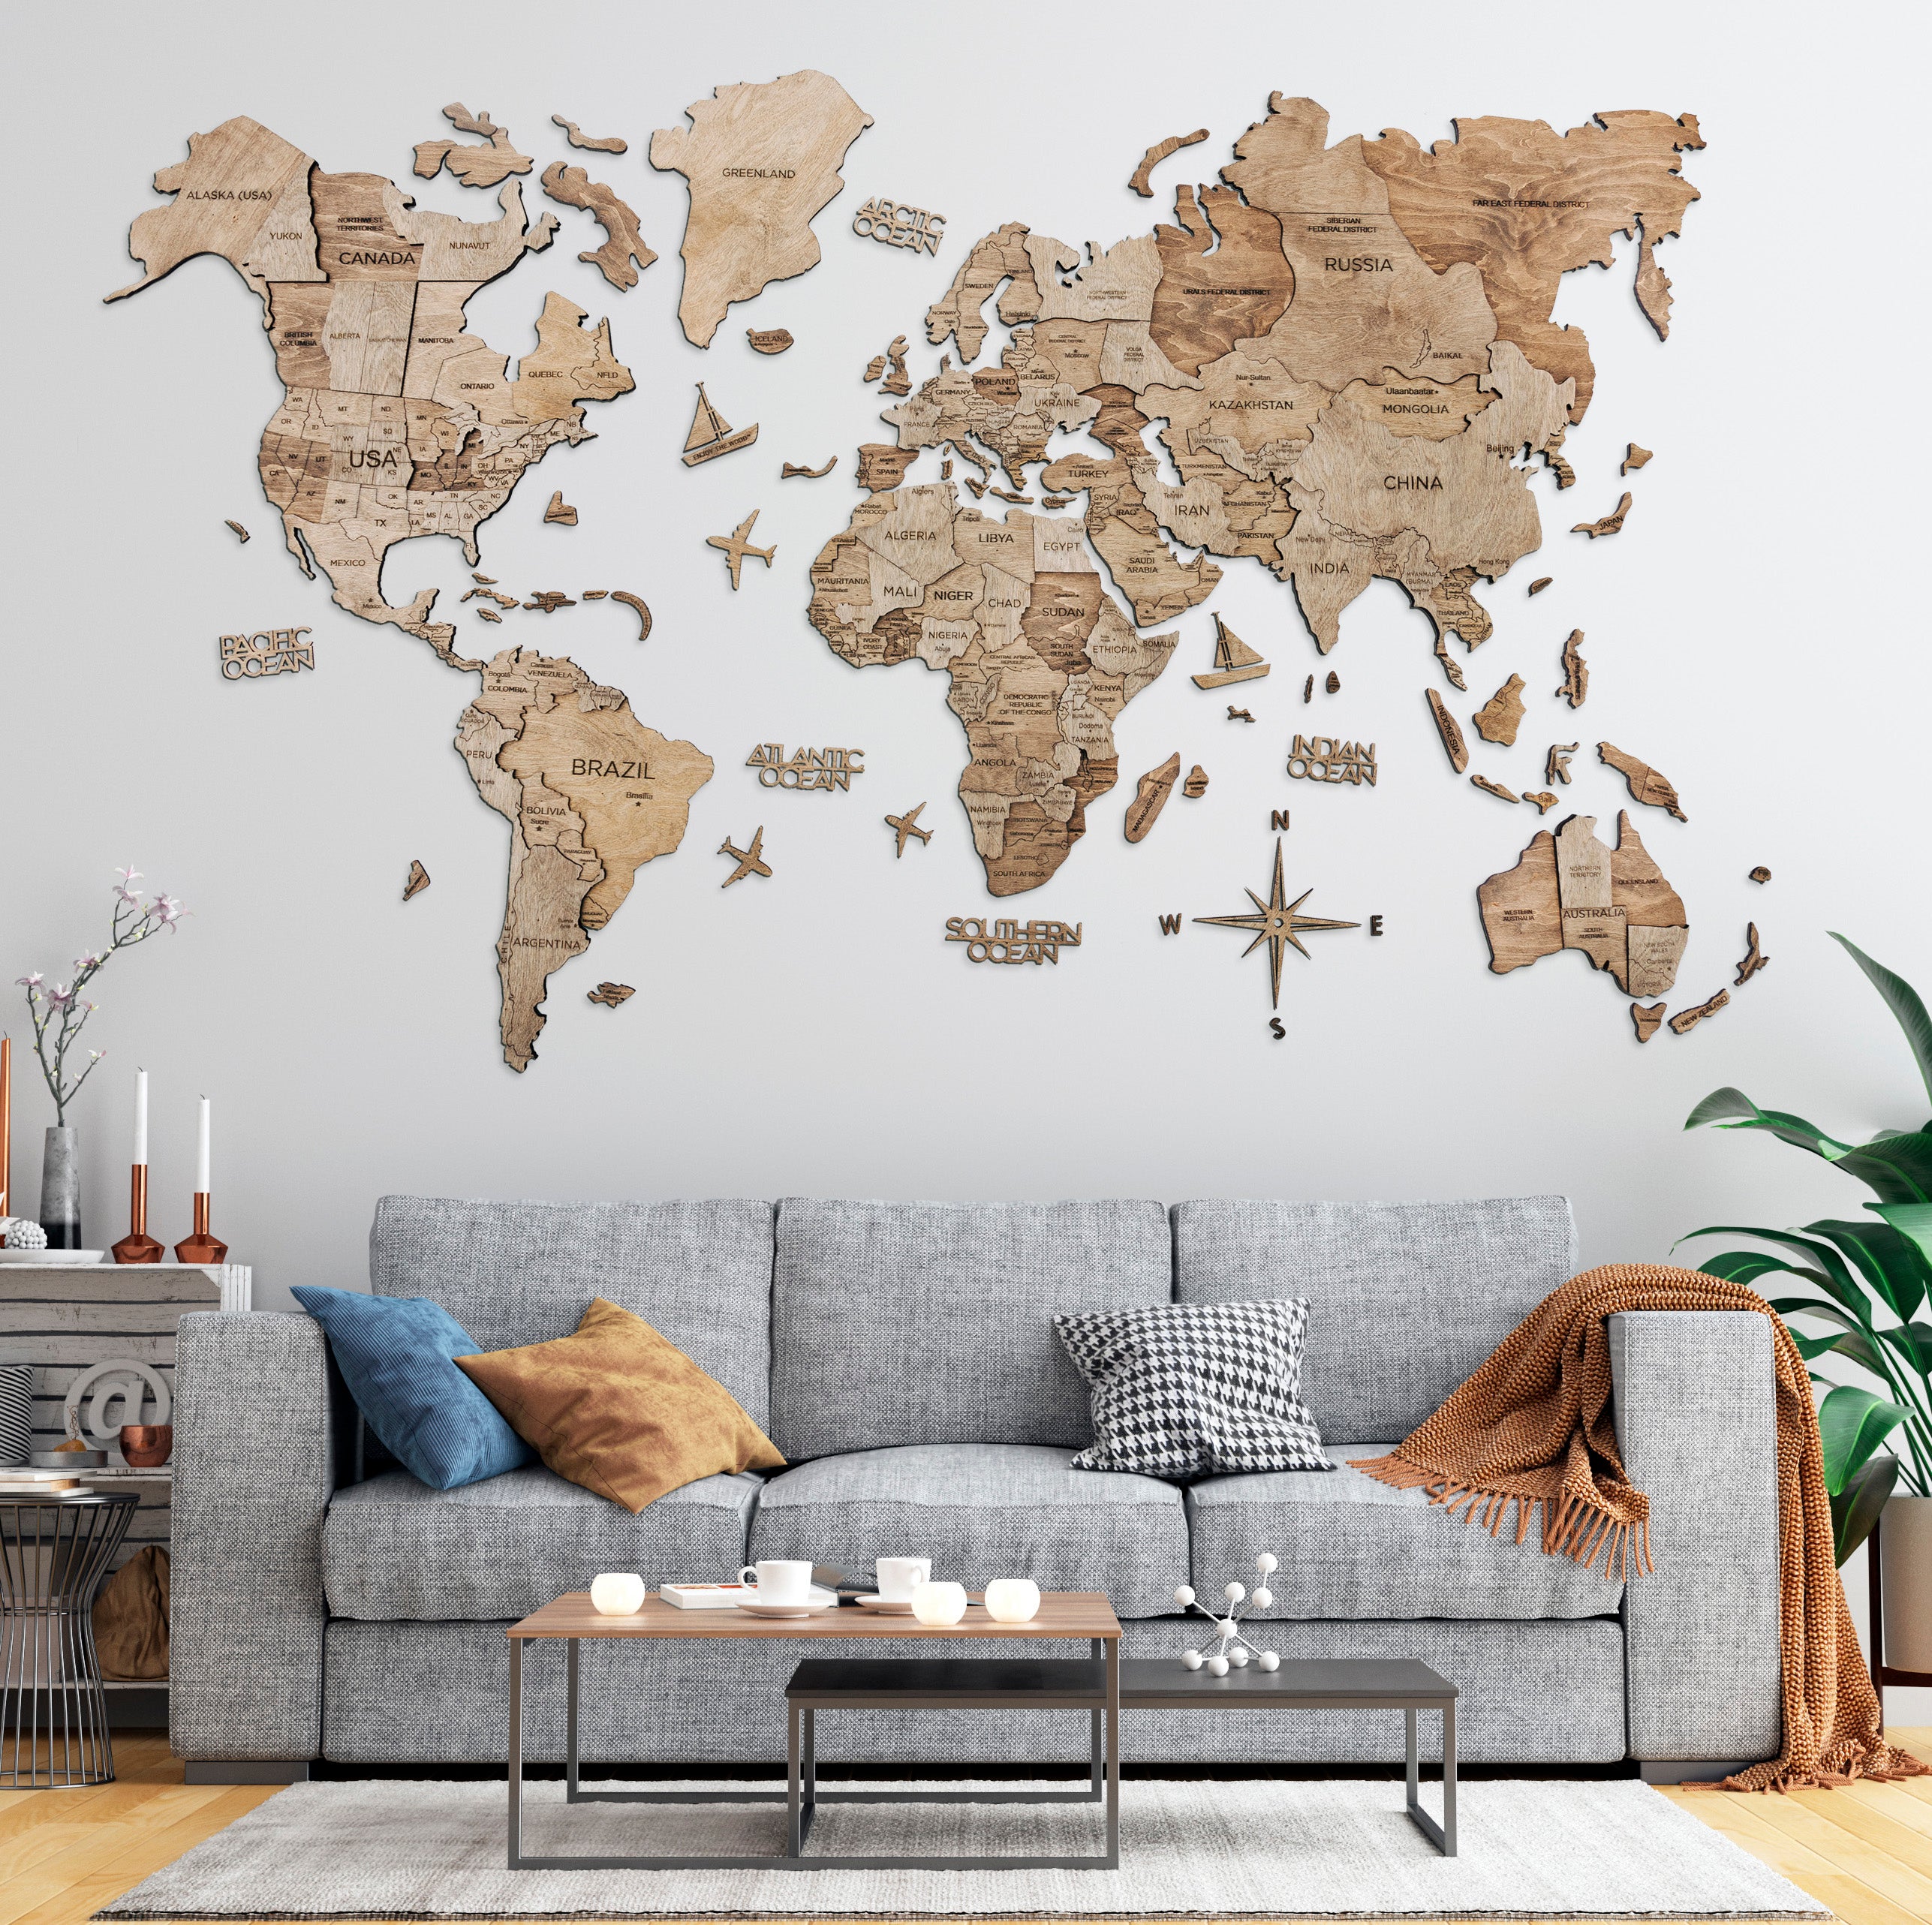 3D Wood World Map テラカラー 壁掛け木製世界地図【翌日出荷